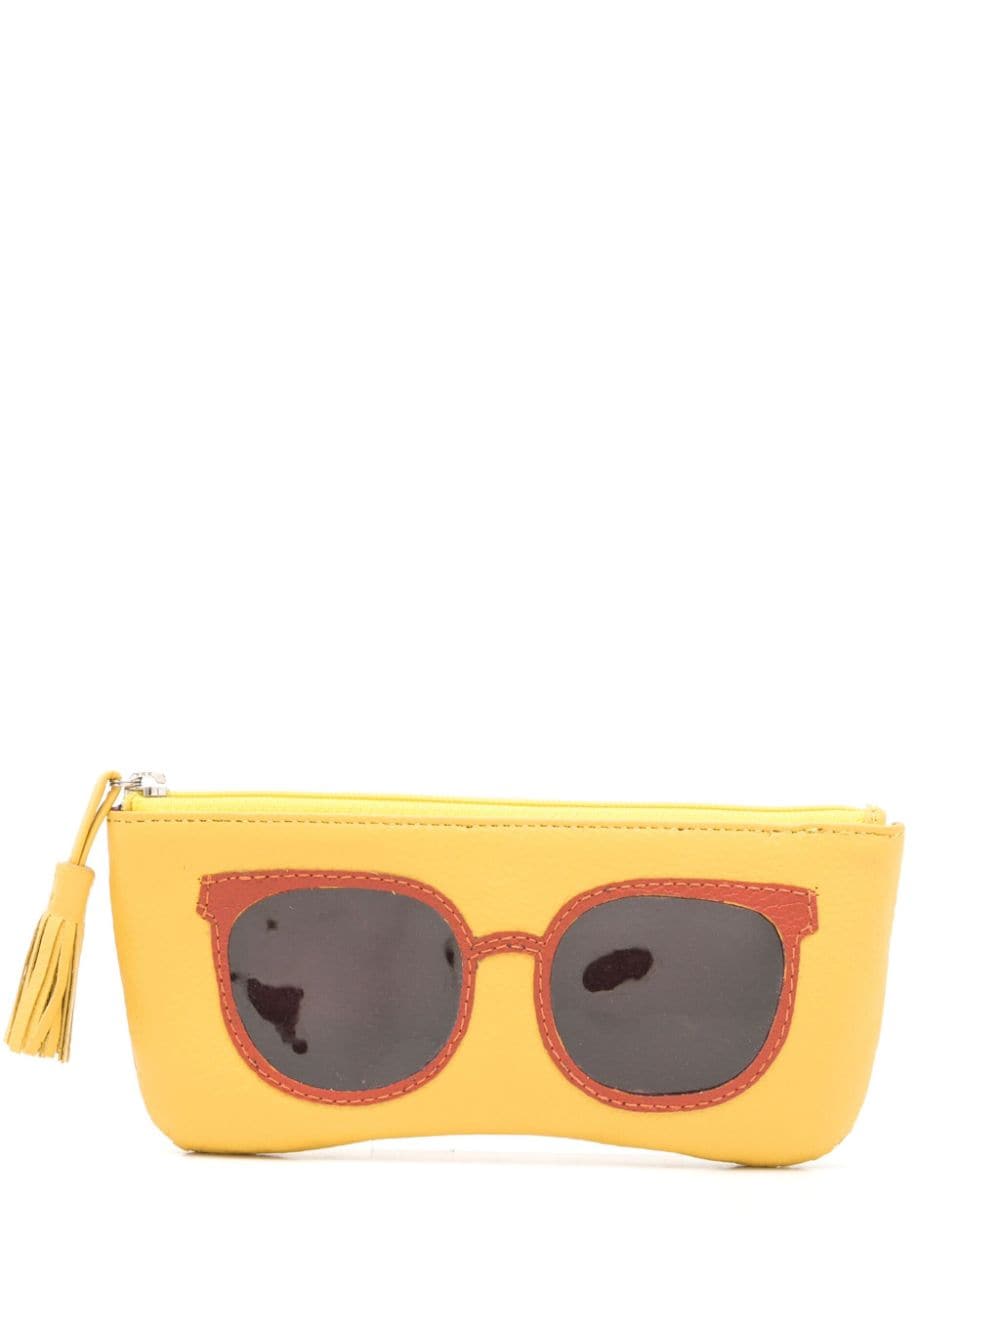 Sarah Chofakian appliquéd leather sunglasses case - Yellow von Sarah Chofakian